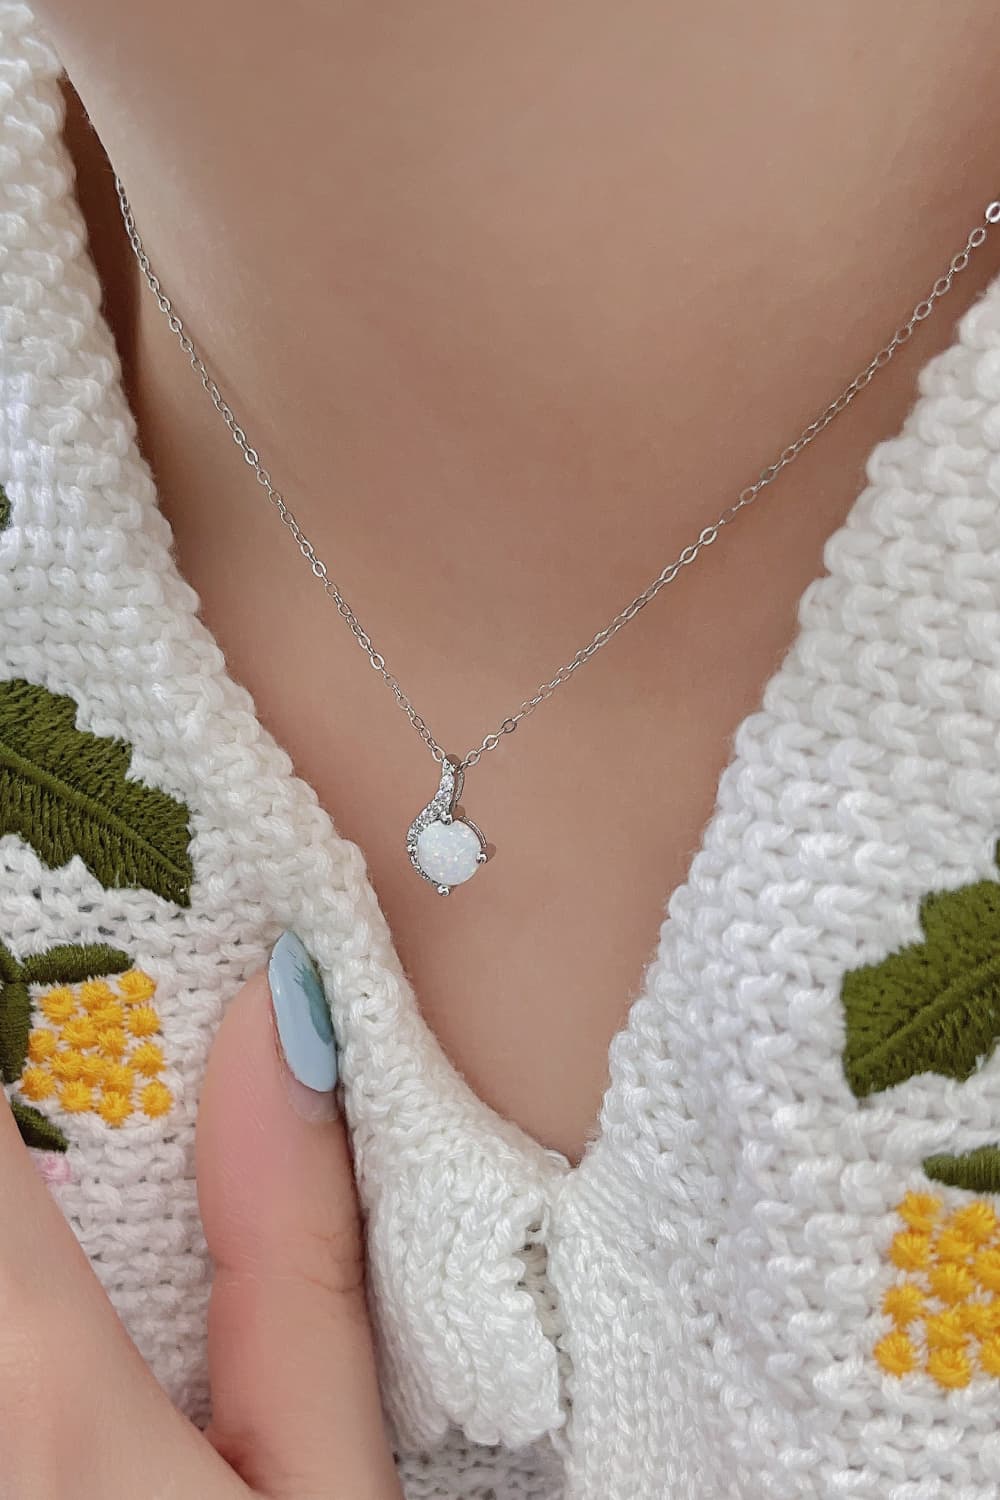 Sweet Beginnings Opal Pendant Necklace BLUE ZONE PLANET